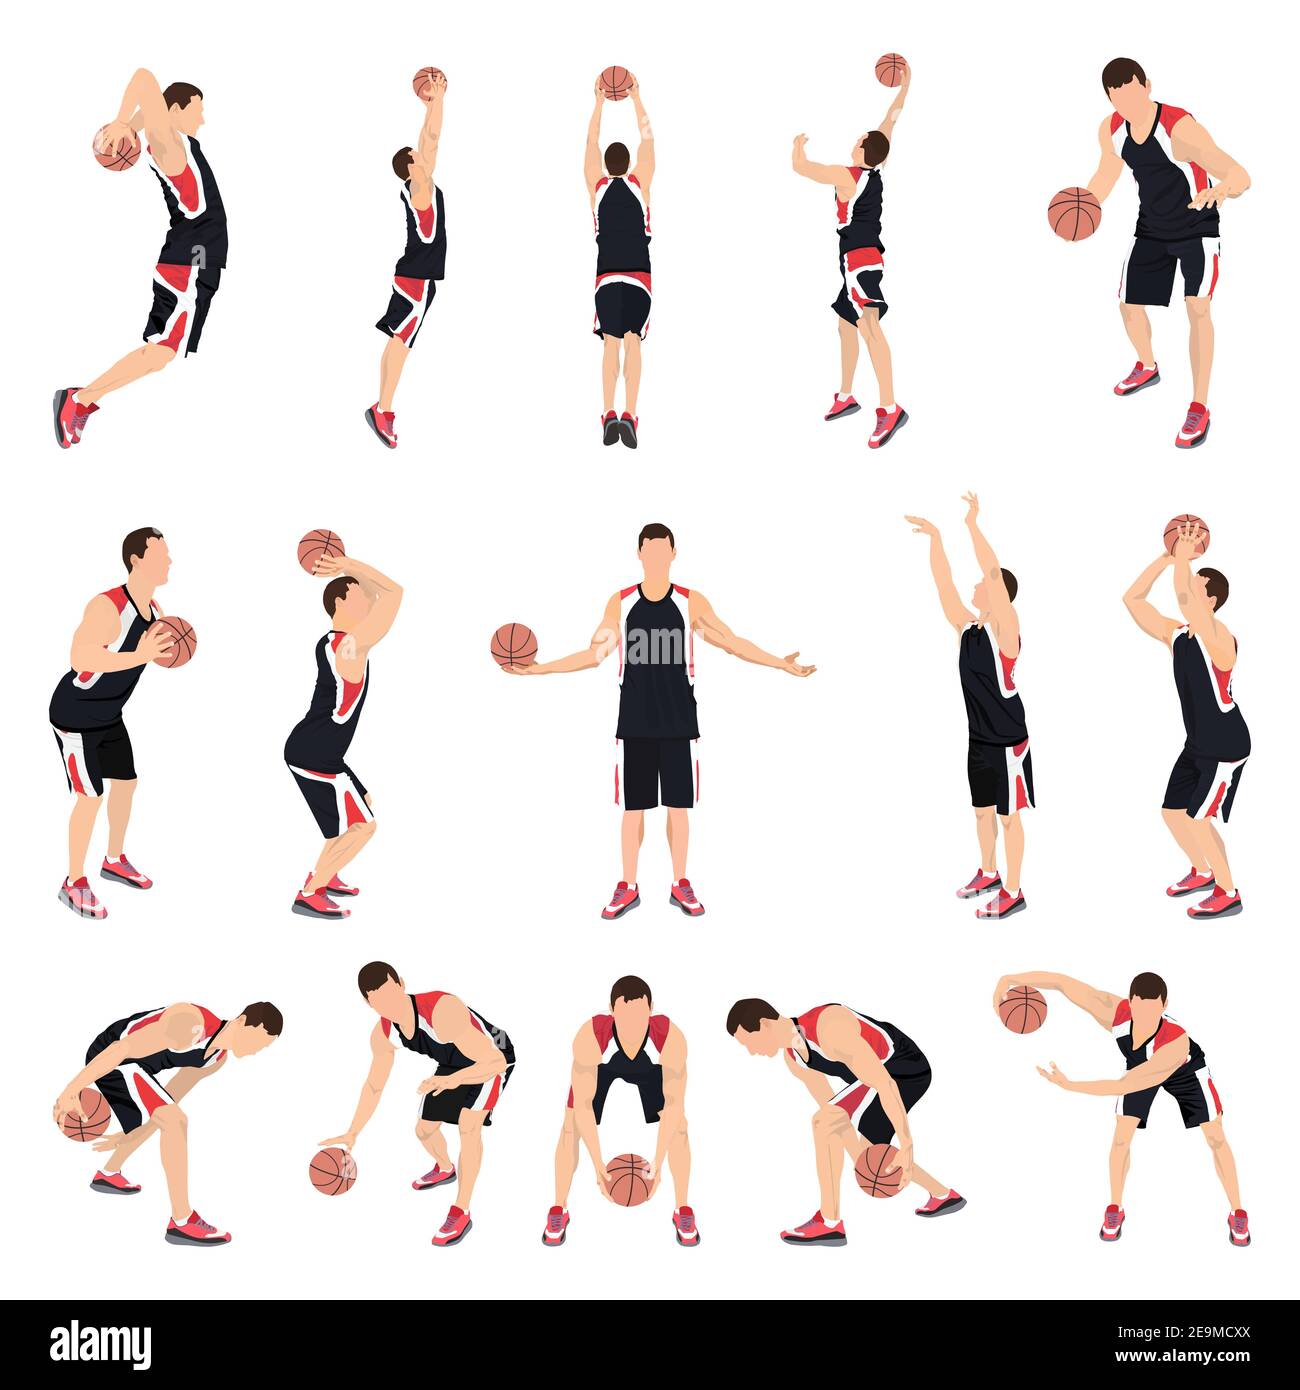 Basketball players, vector illustration. Crossover dribbling, bouncing, passing, shooting ball, free throw, slam dunk. Stock Vector